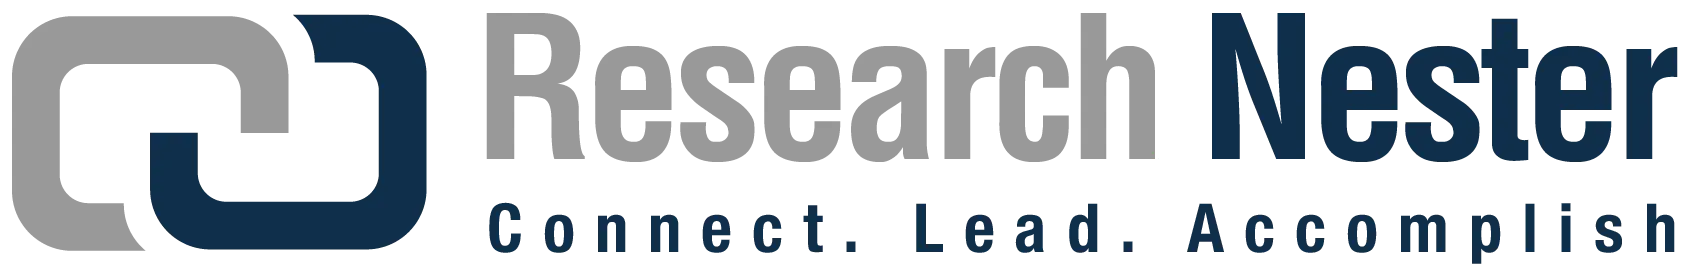 Research Nester Logo